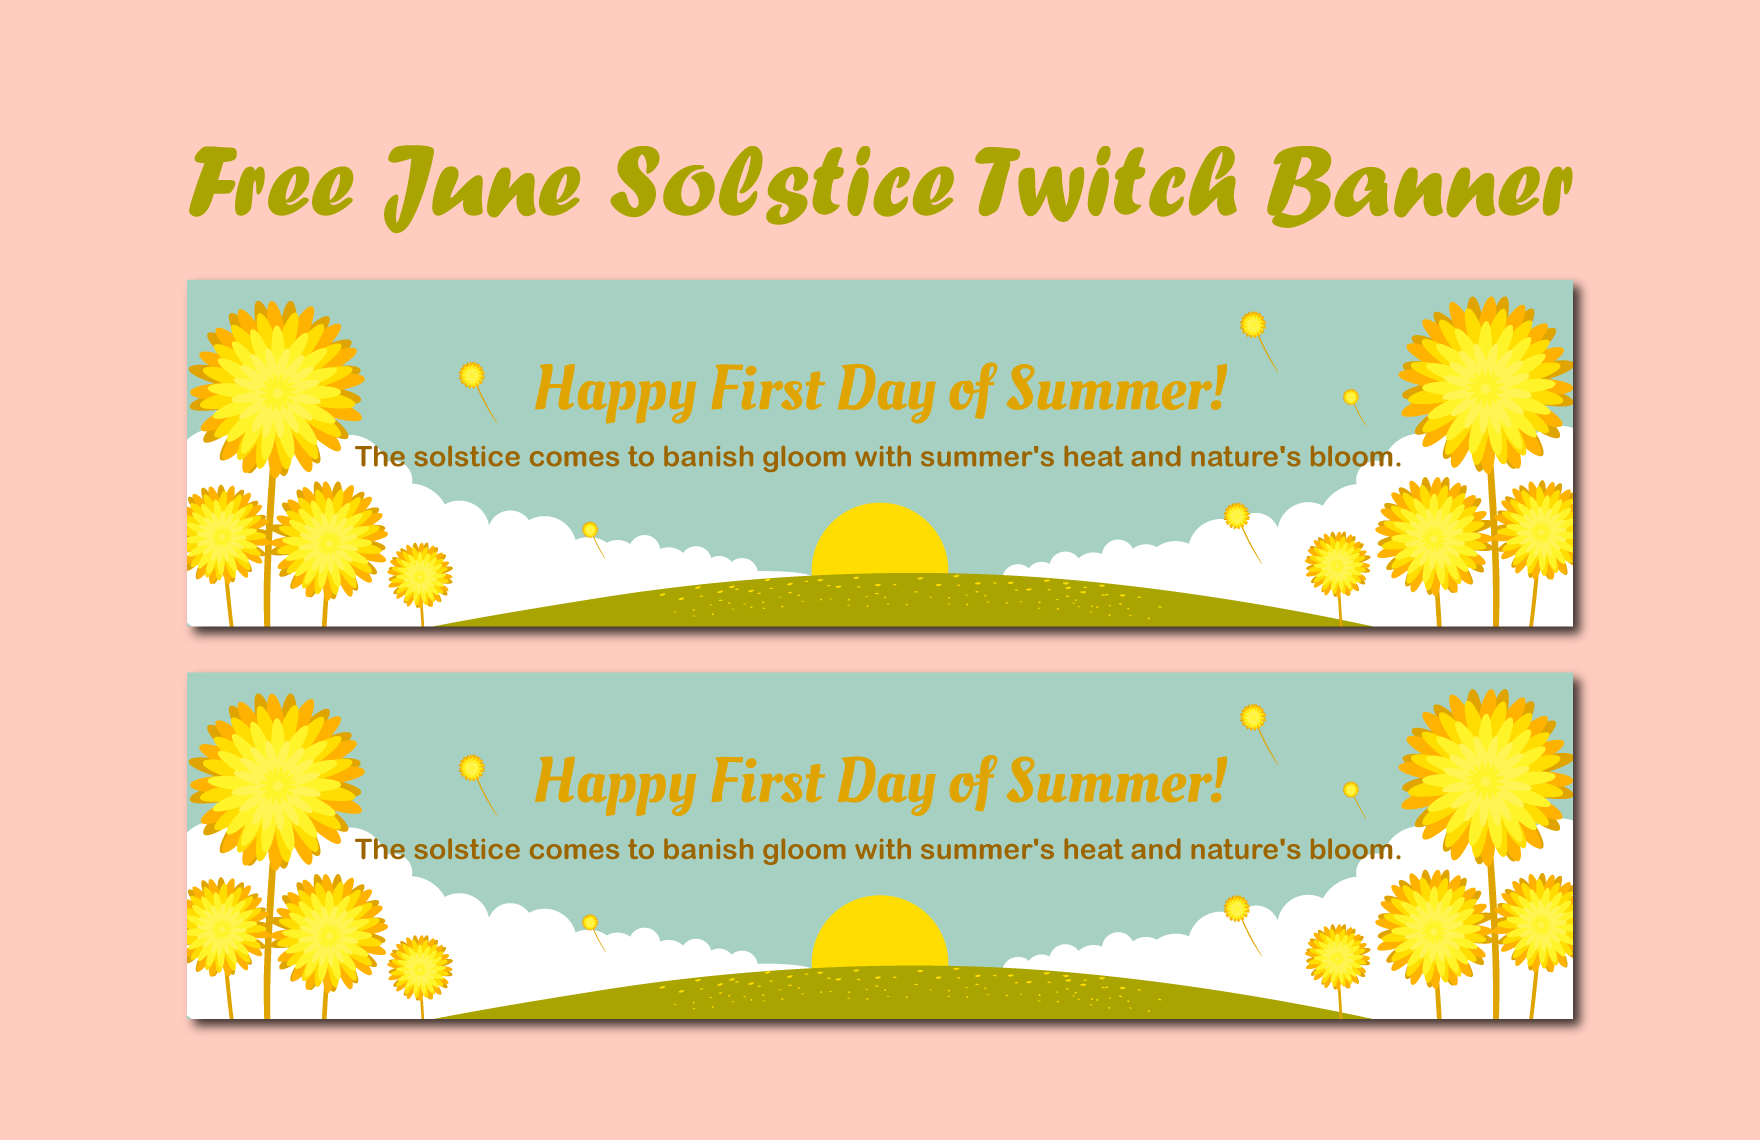 June Solstice Twitch Banner